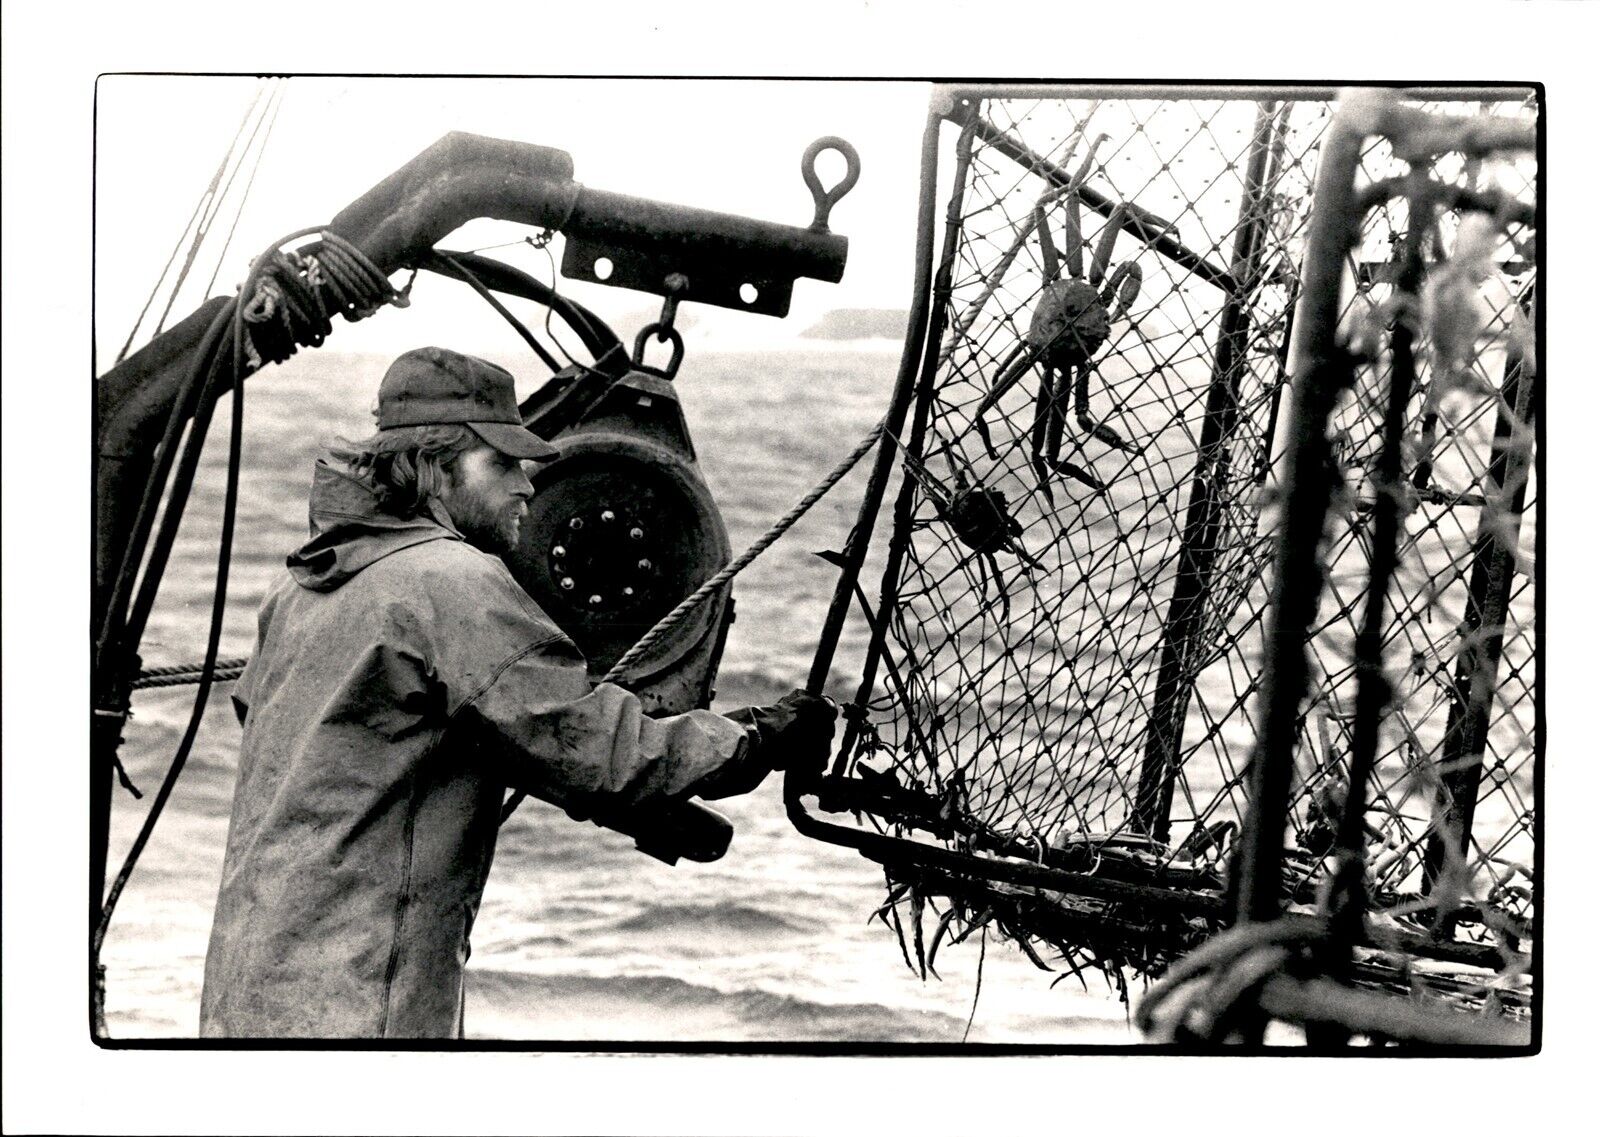 LD348 1985 Orig Natalie Fobes Photo CRAB FISHERMAN WORKS IN DUTCH HARBOR IN 1983